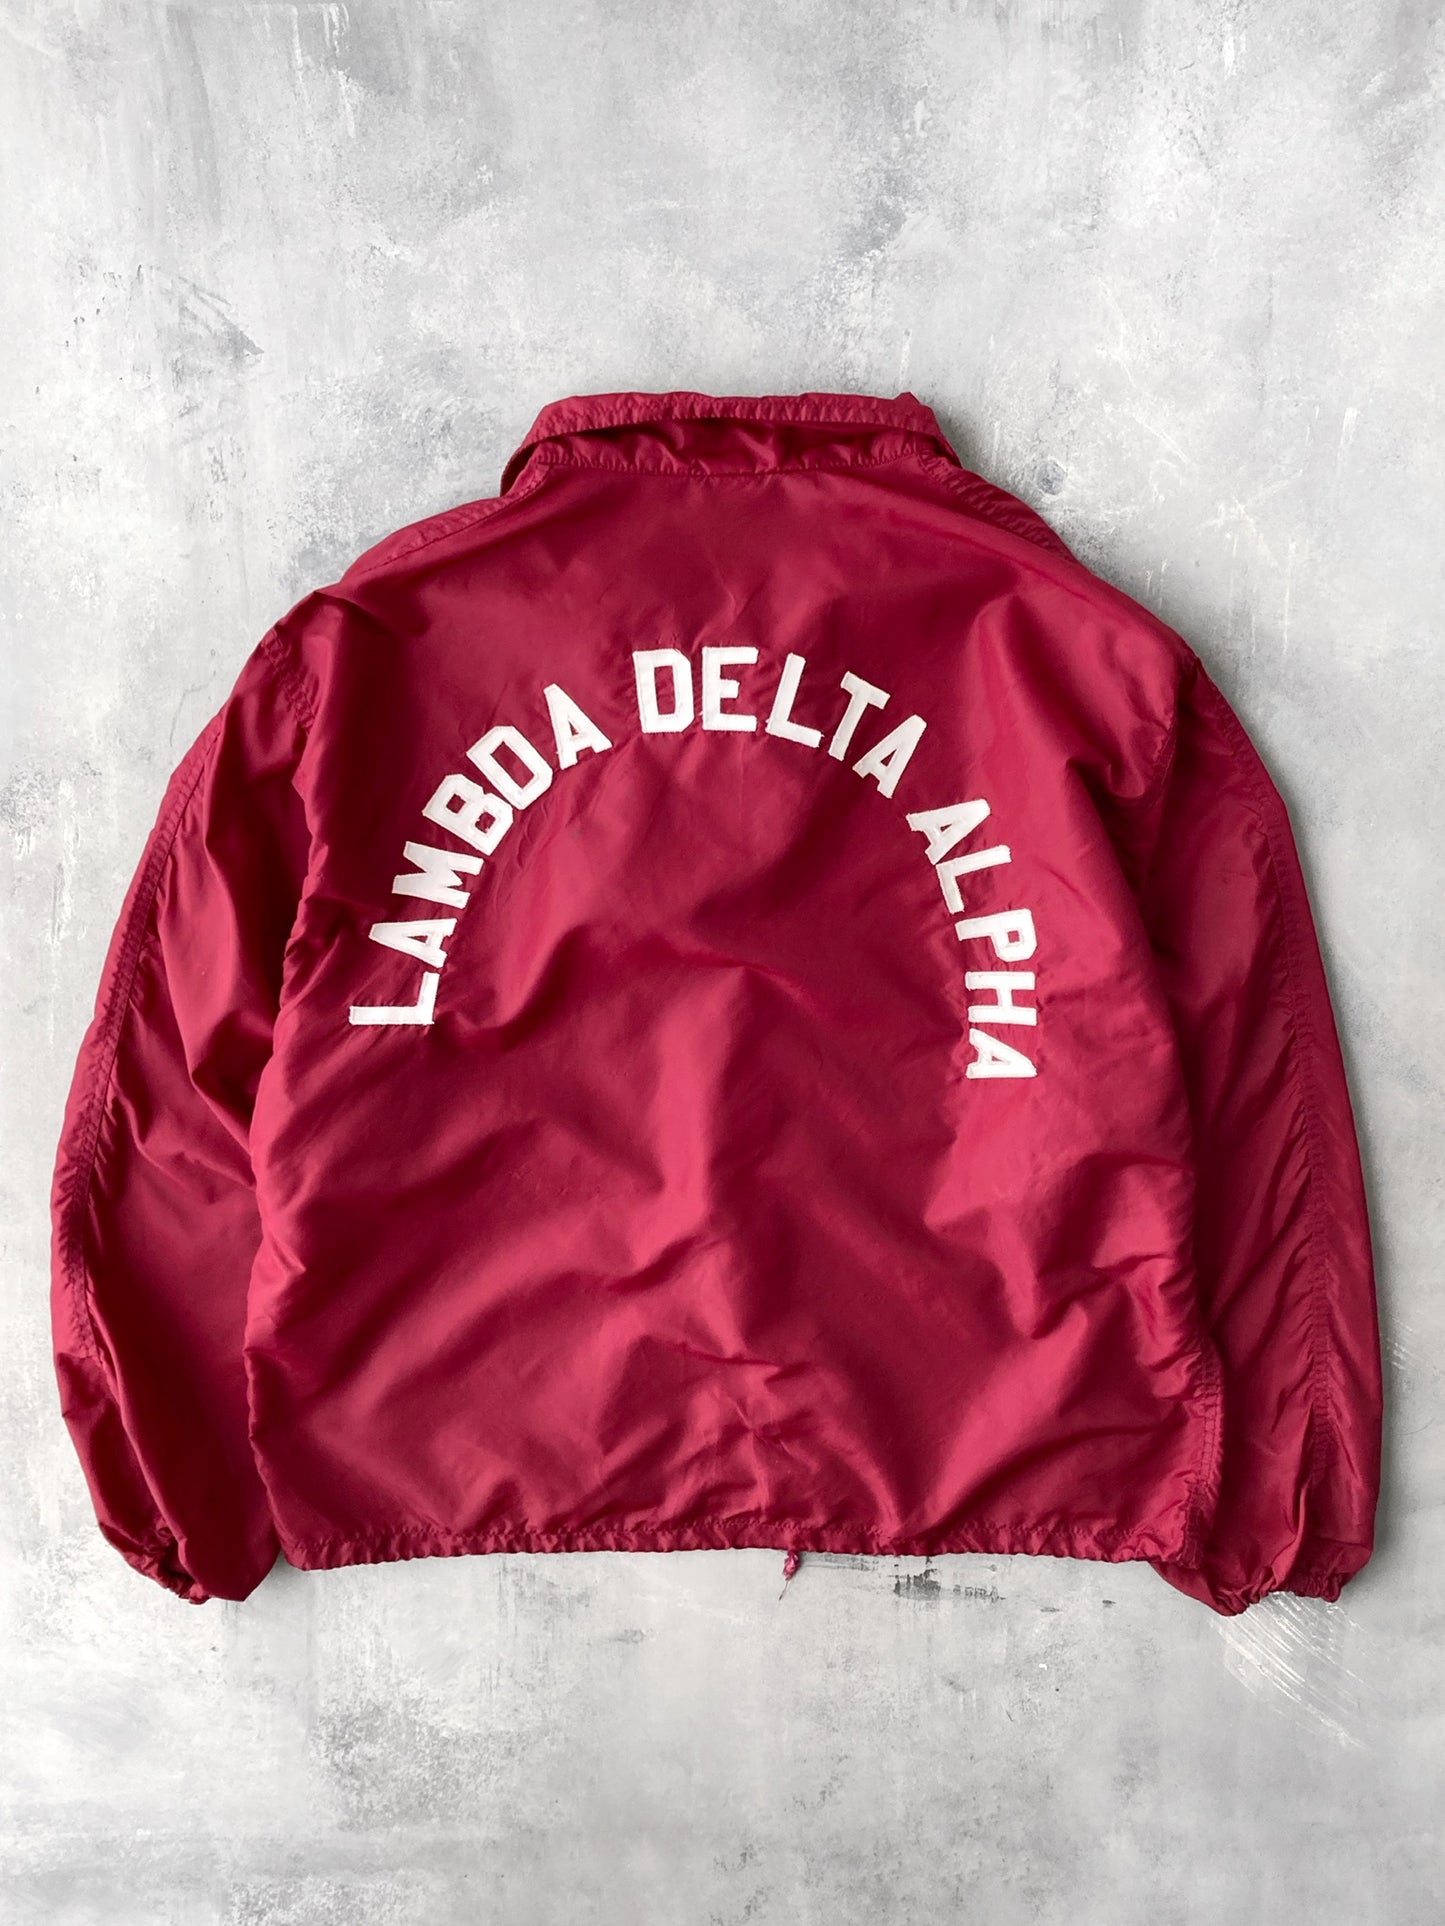 Lambda Delta Alpha Fraternity Jacket 50's - Large